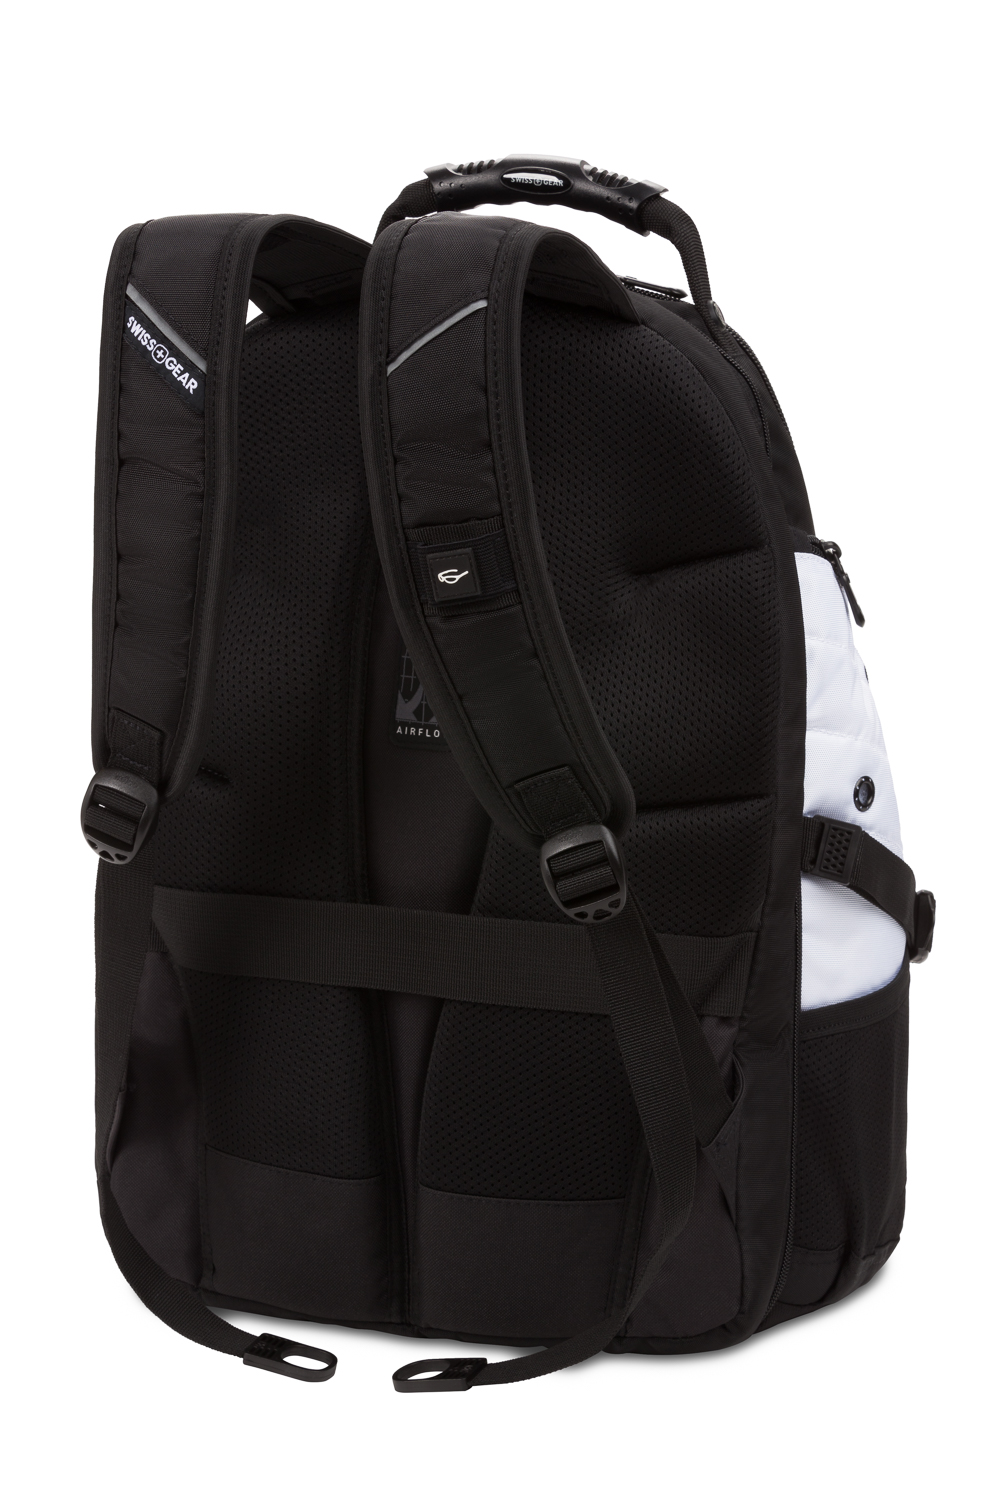 SWISSGEAR 1900 Black Series ScanSmart Laptop Backpack - Black/White